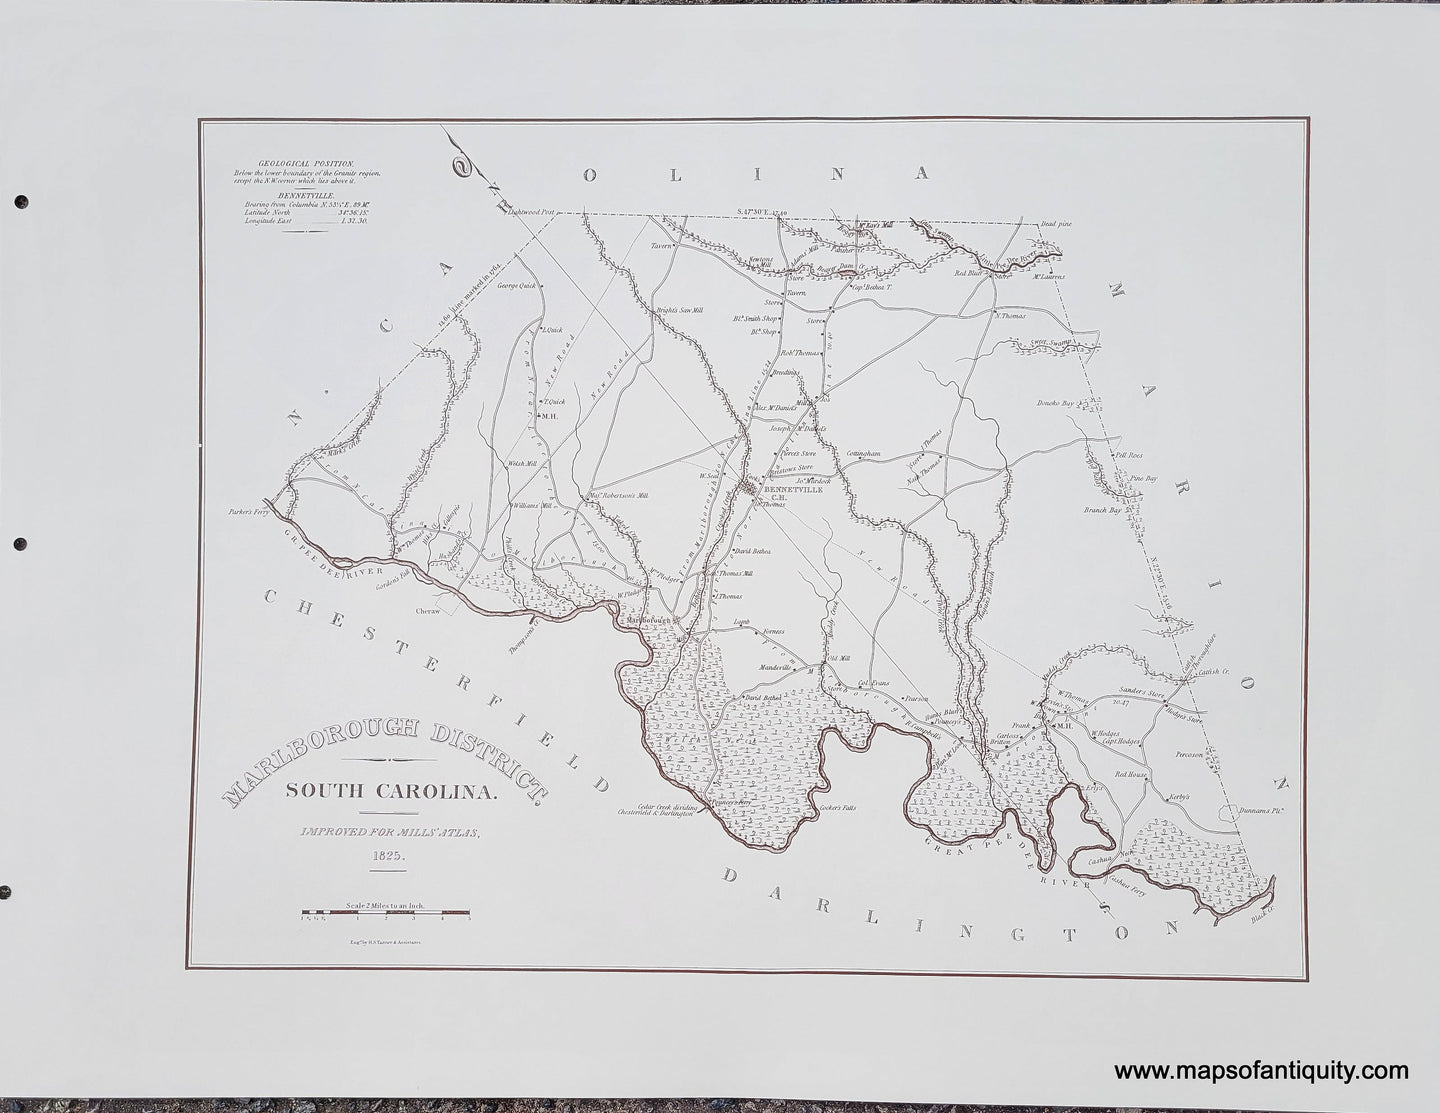 Reproduction-Marlboro District, South Carolina-1825 / 1979--Maps-Of-Antiquity